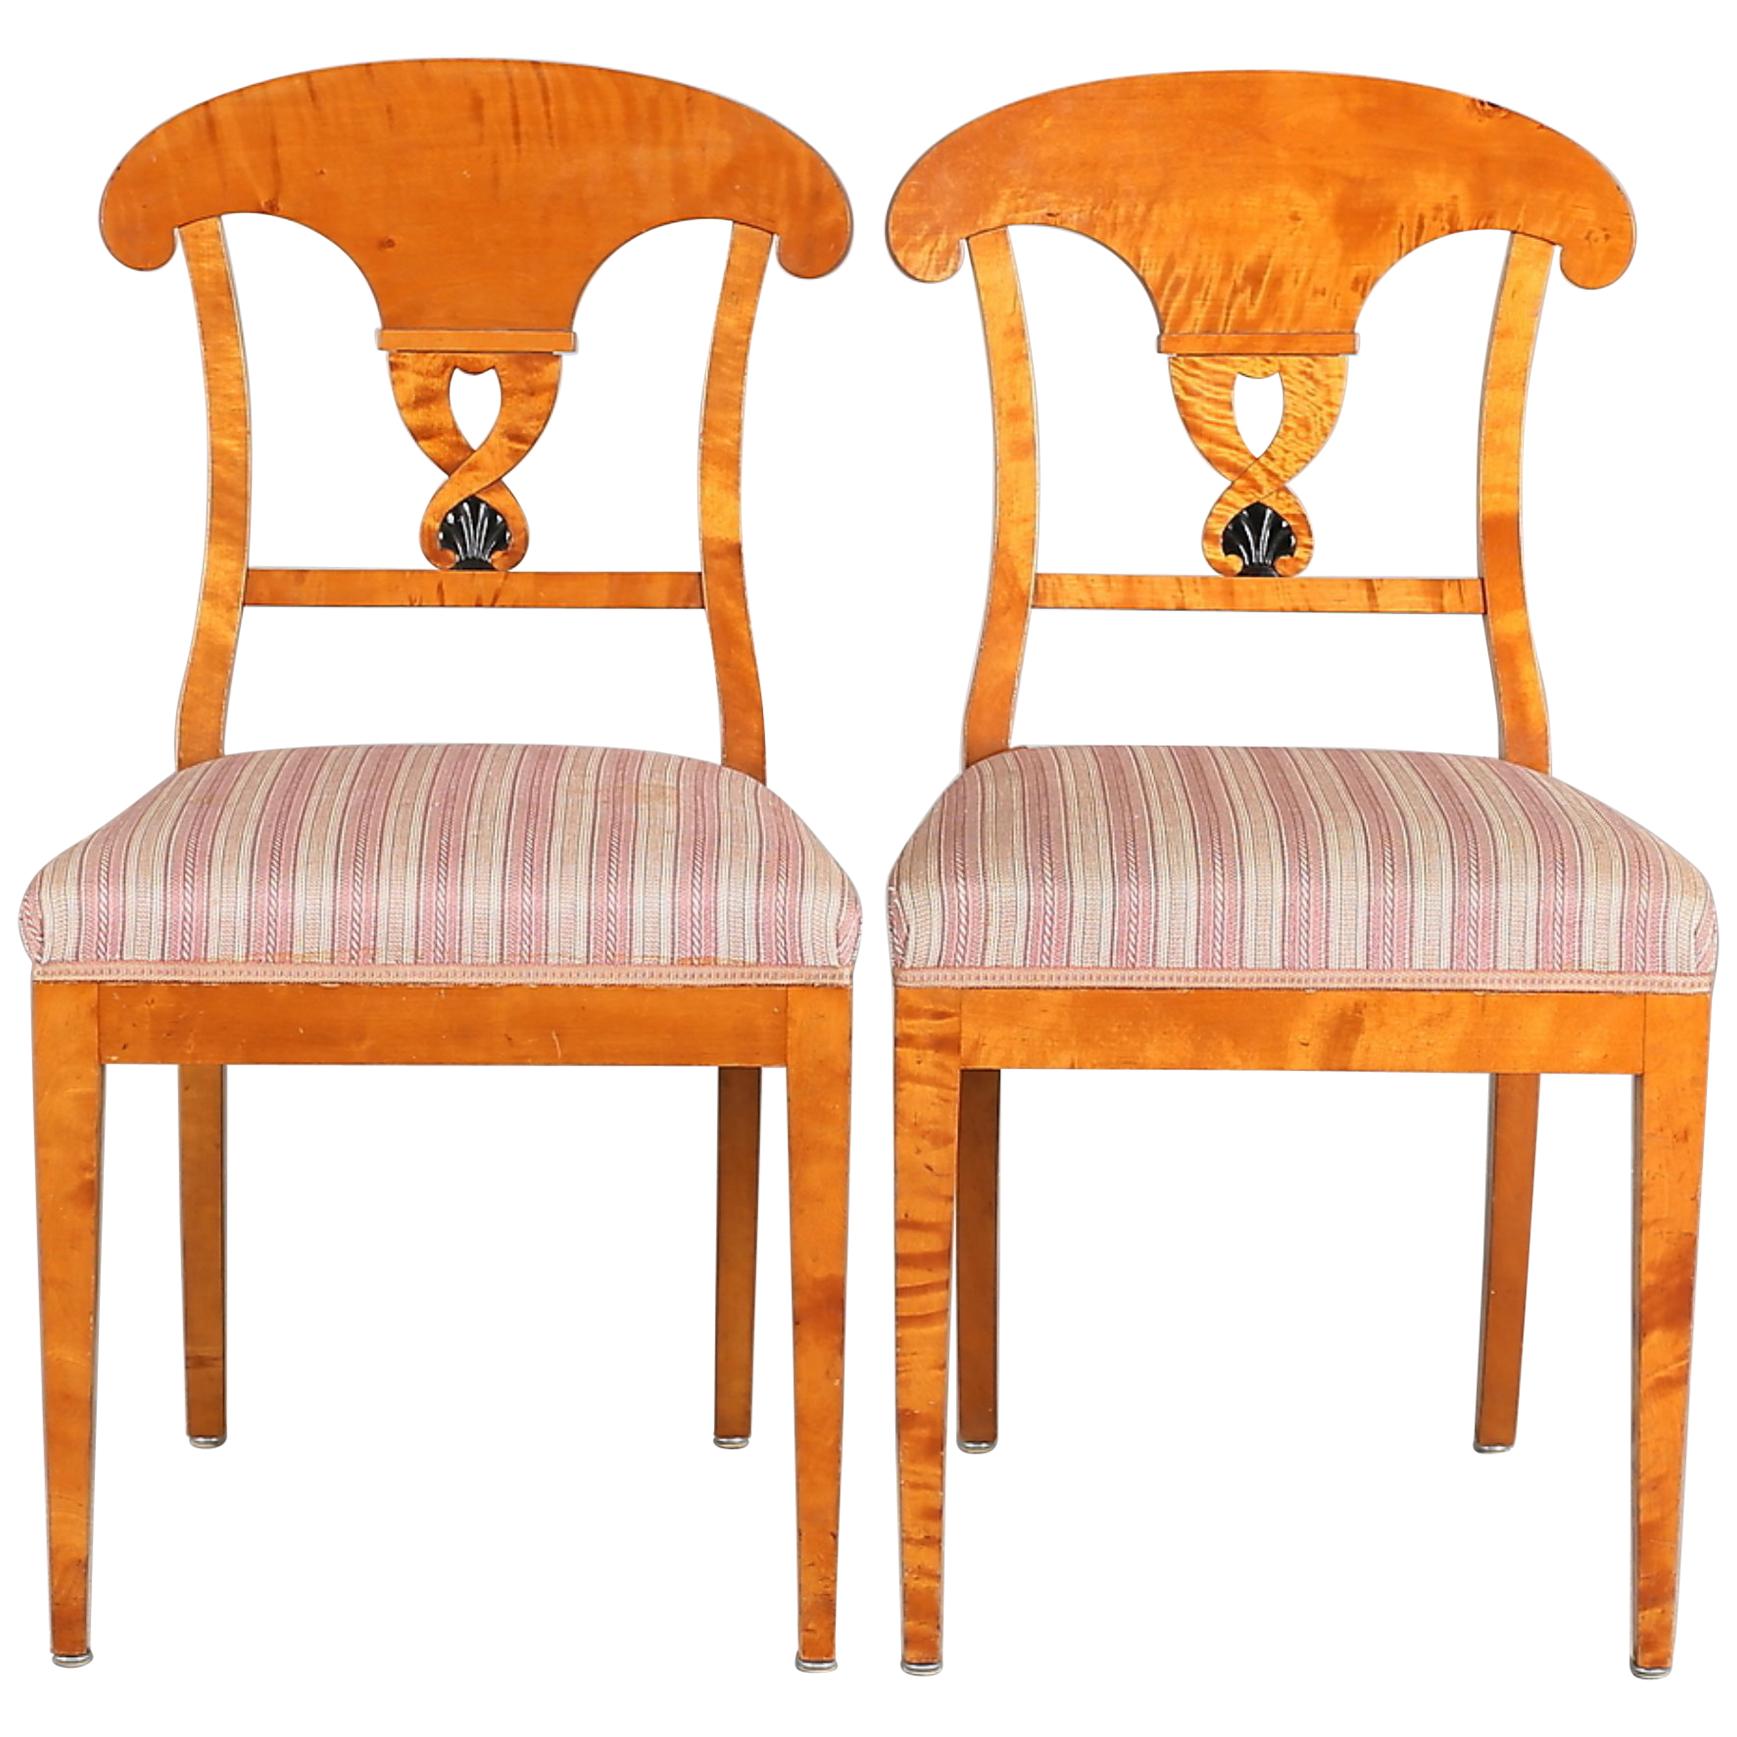 Swedish Biedermeier Empire Roundel Dining Chairs, 19th Century Ormolu Style Pair